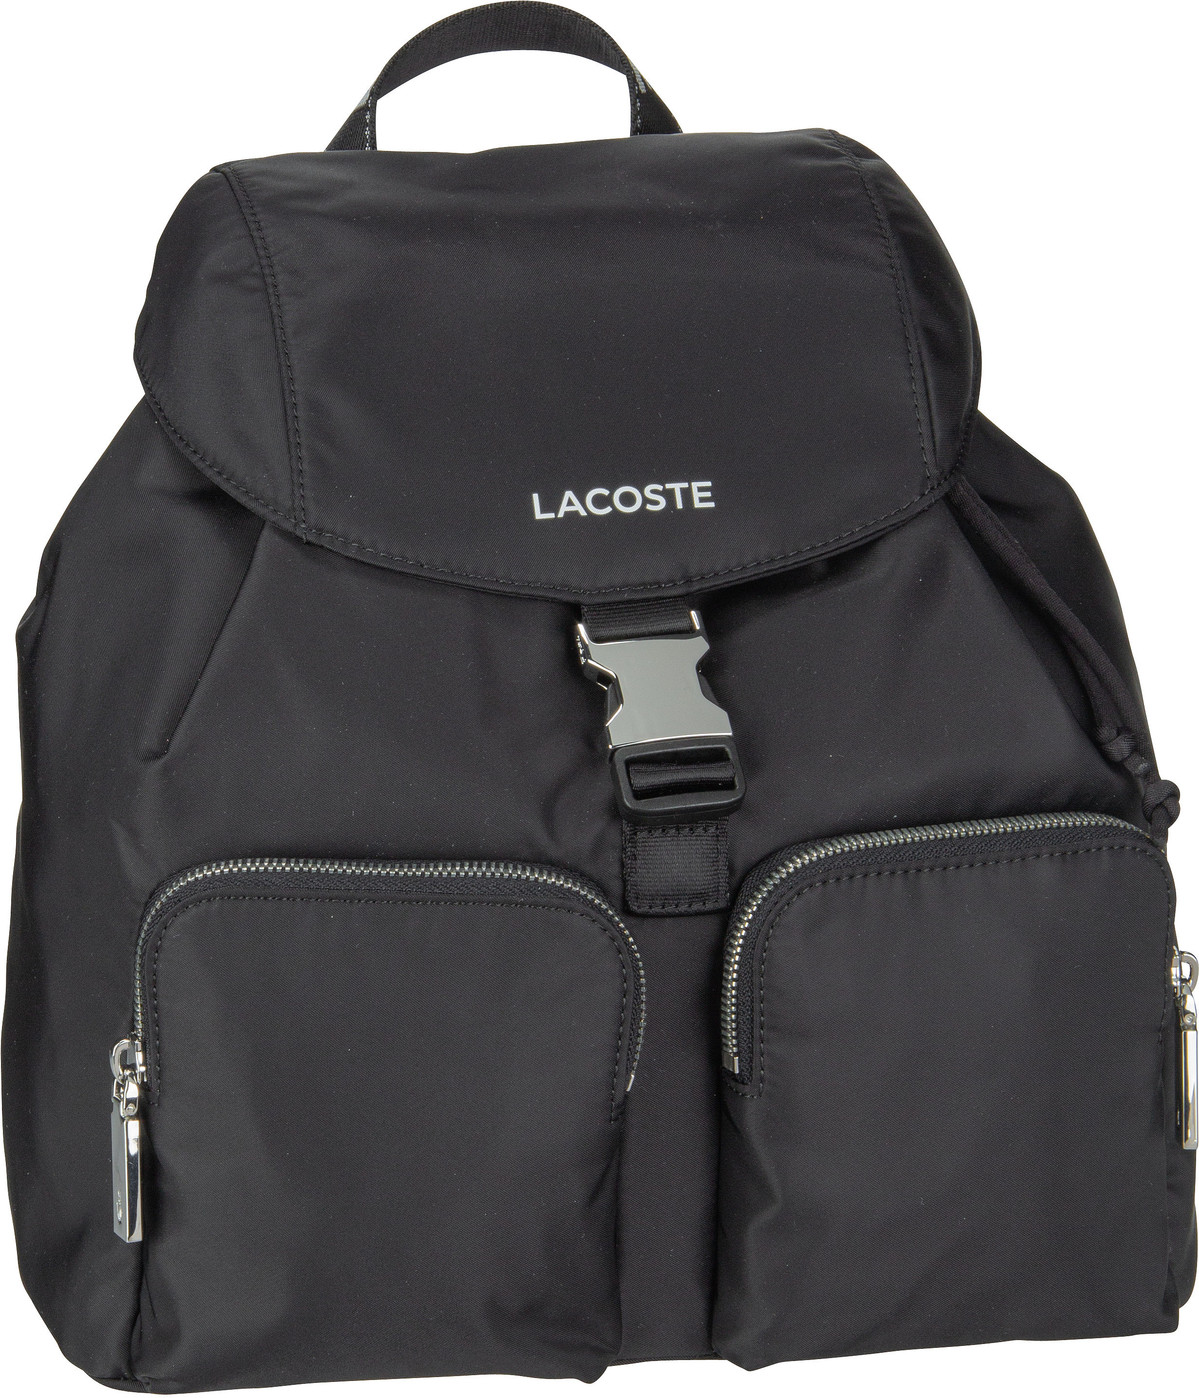 Lacoste Active Nylon Backpack - Black